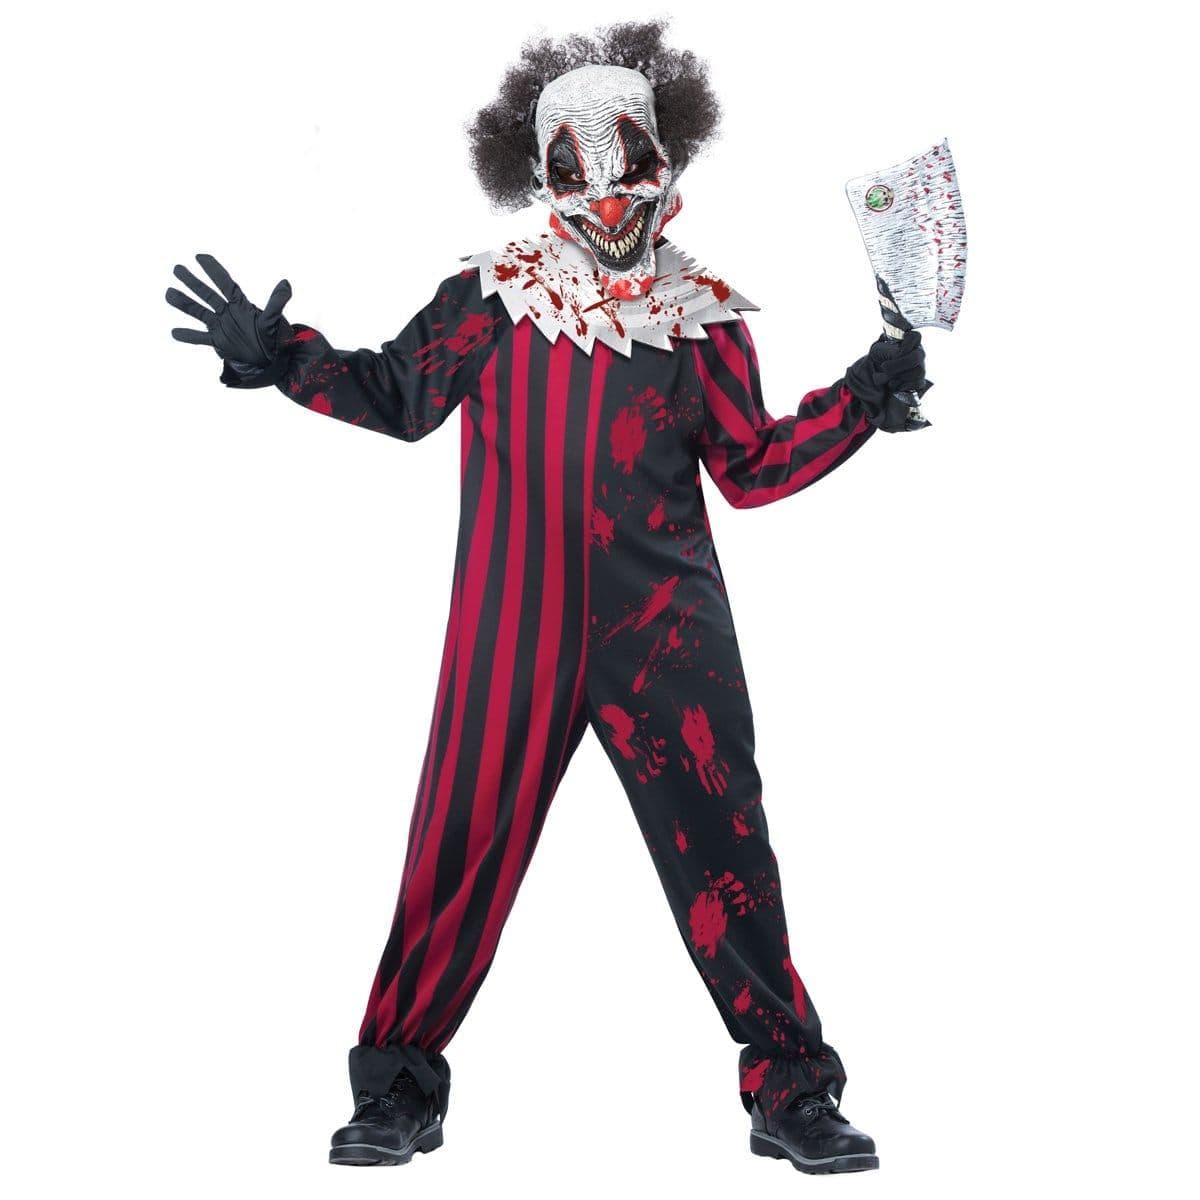 Acheter Accessoire Déguisement : Masque Clown Effrayant 18 x 17 x